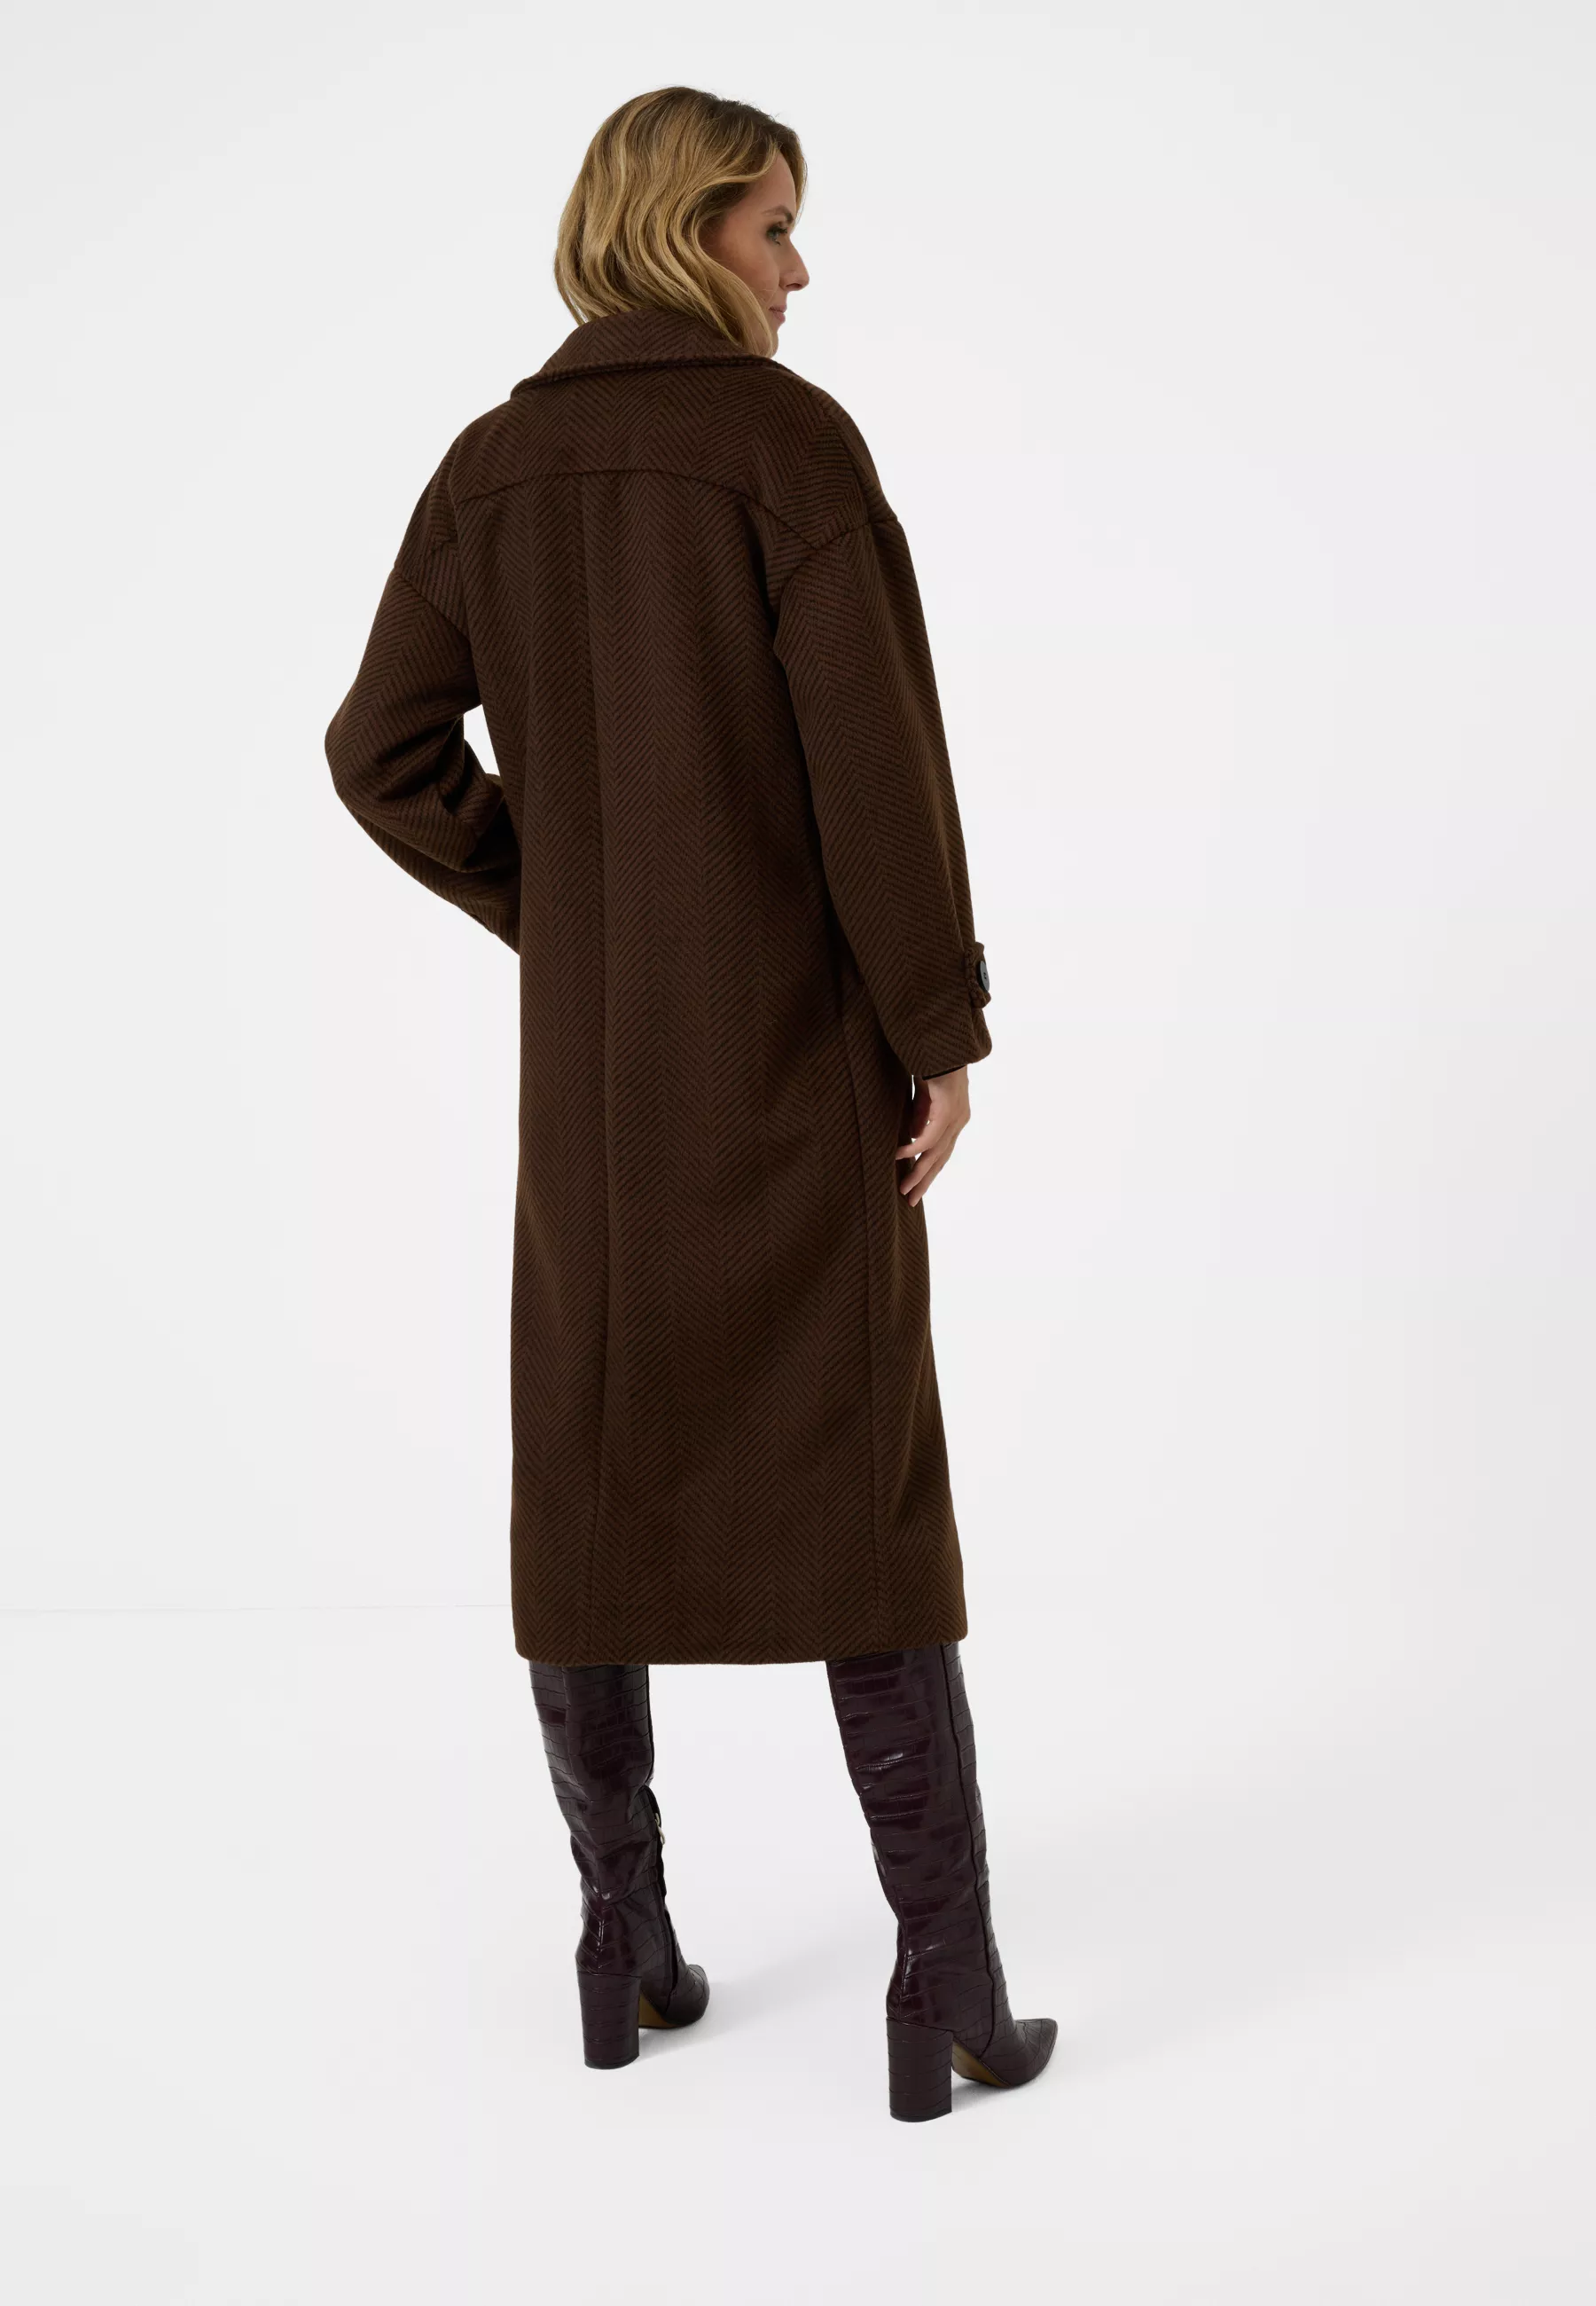 Damen Textil Mantel Franca in Braun gestreift von Ricano, Rückansicht am Model